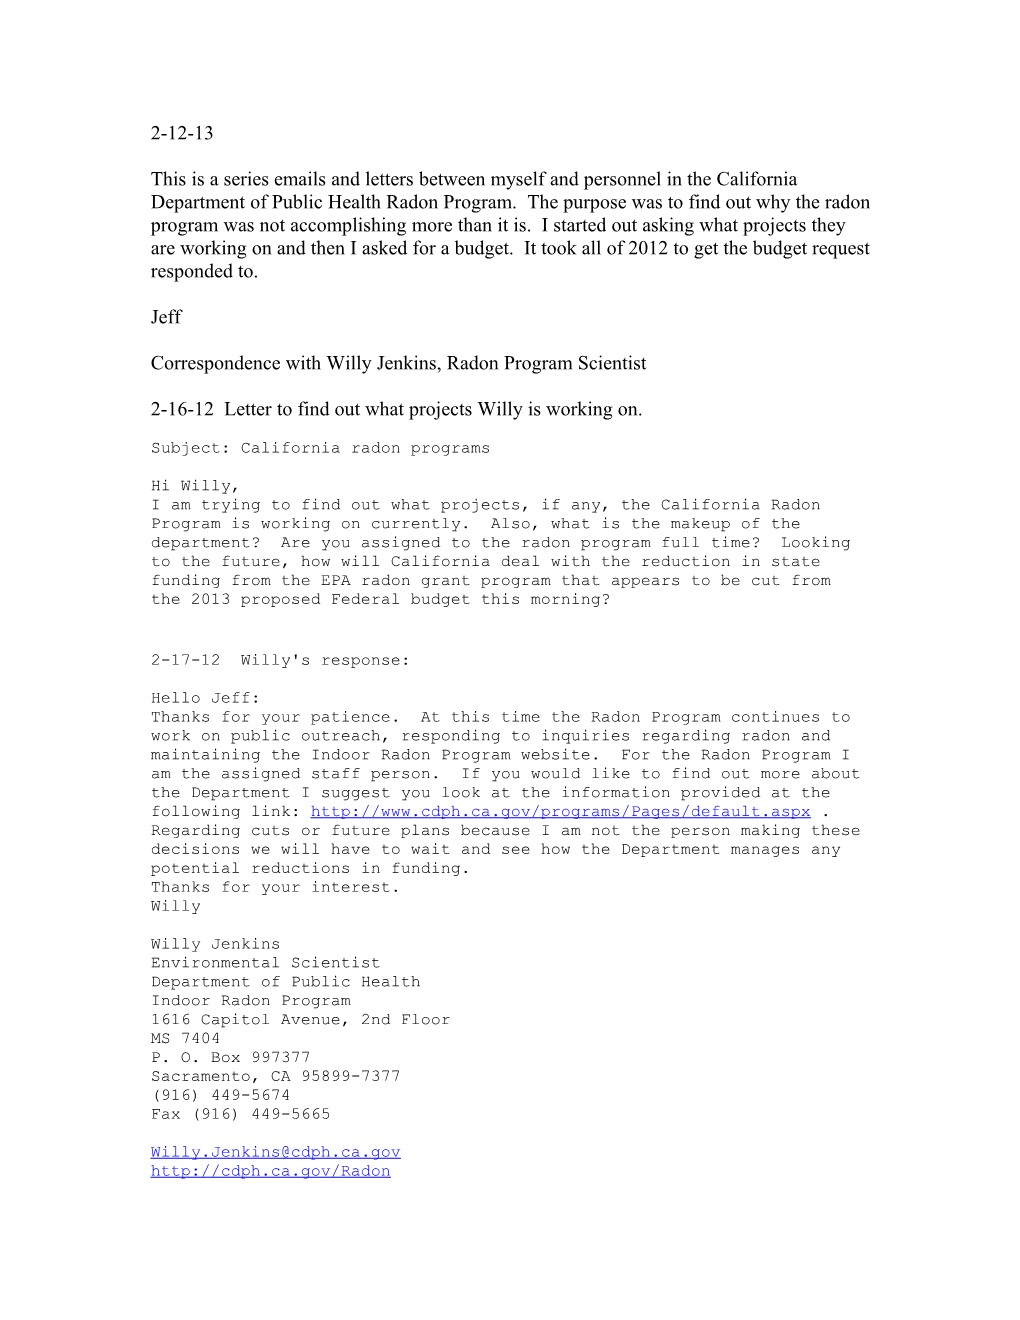 Correspondence with Willy Jenkins, Radon Program Scientist